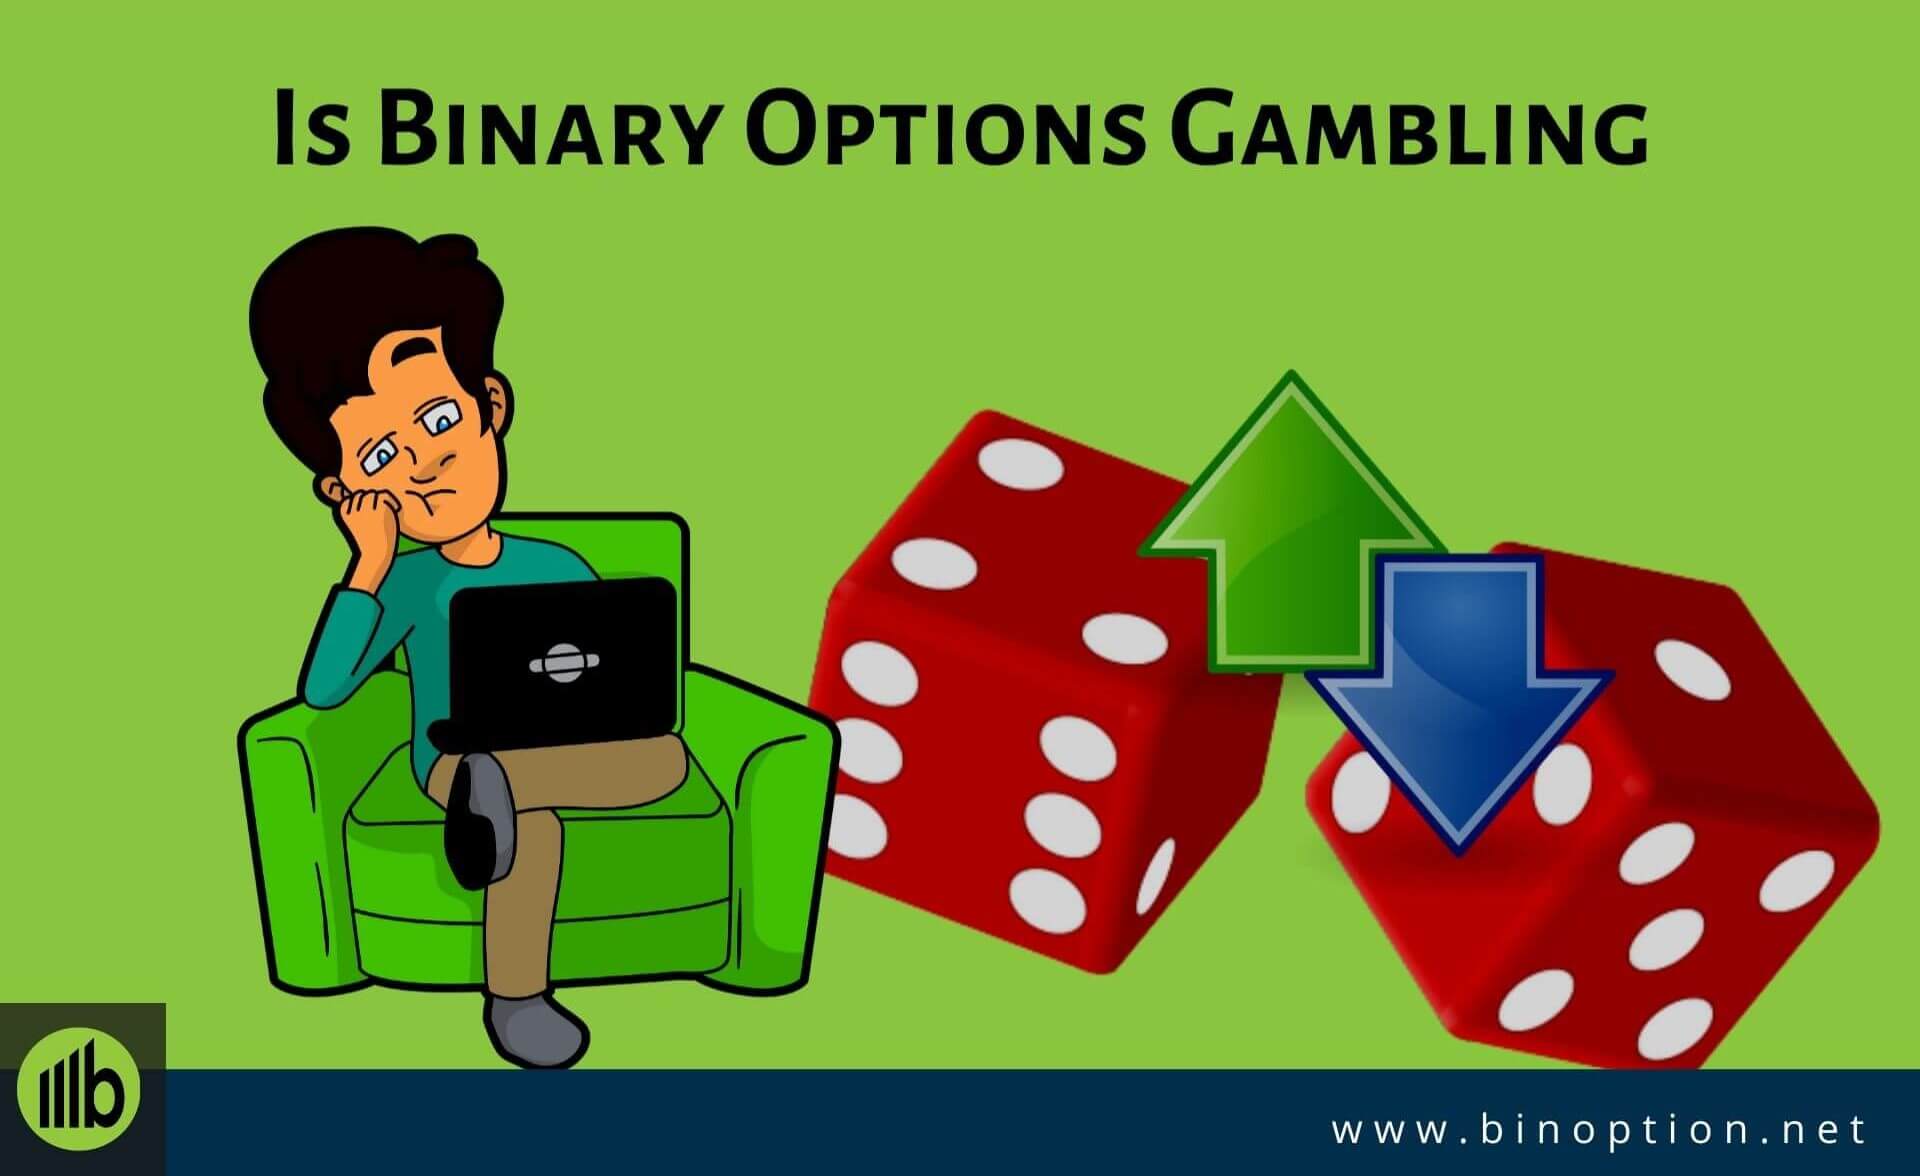 Regulated binary options brokers 2020